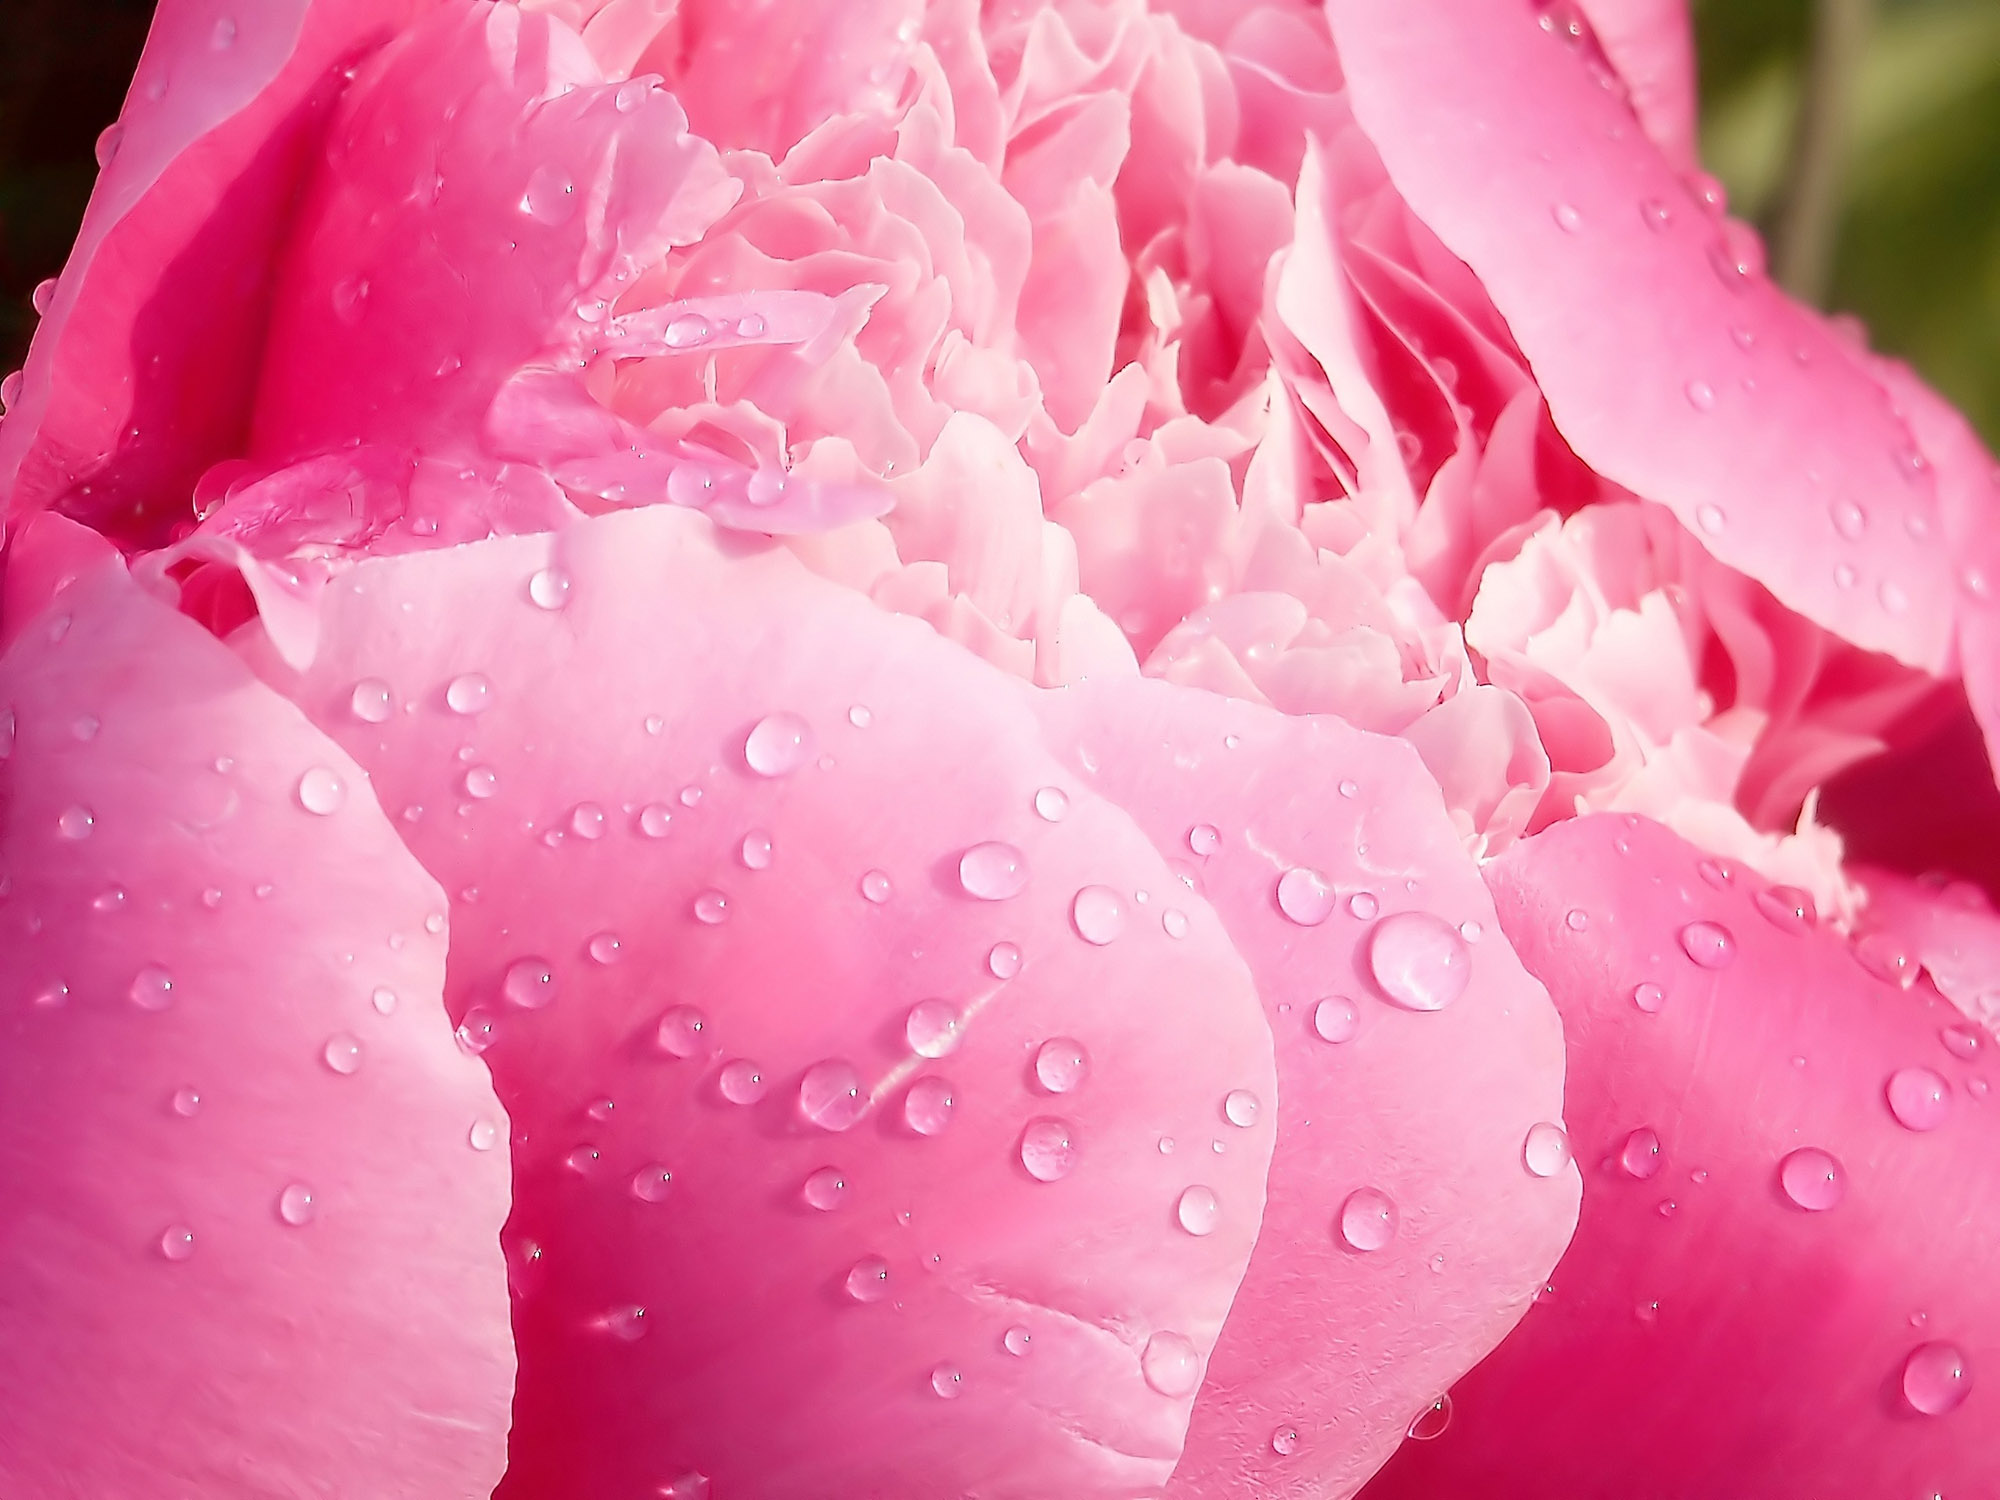 Tom Ford Rose Garden Collection Fragrances Reviewed — MEN'S STYLE BLOG